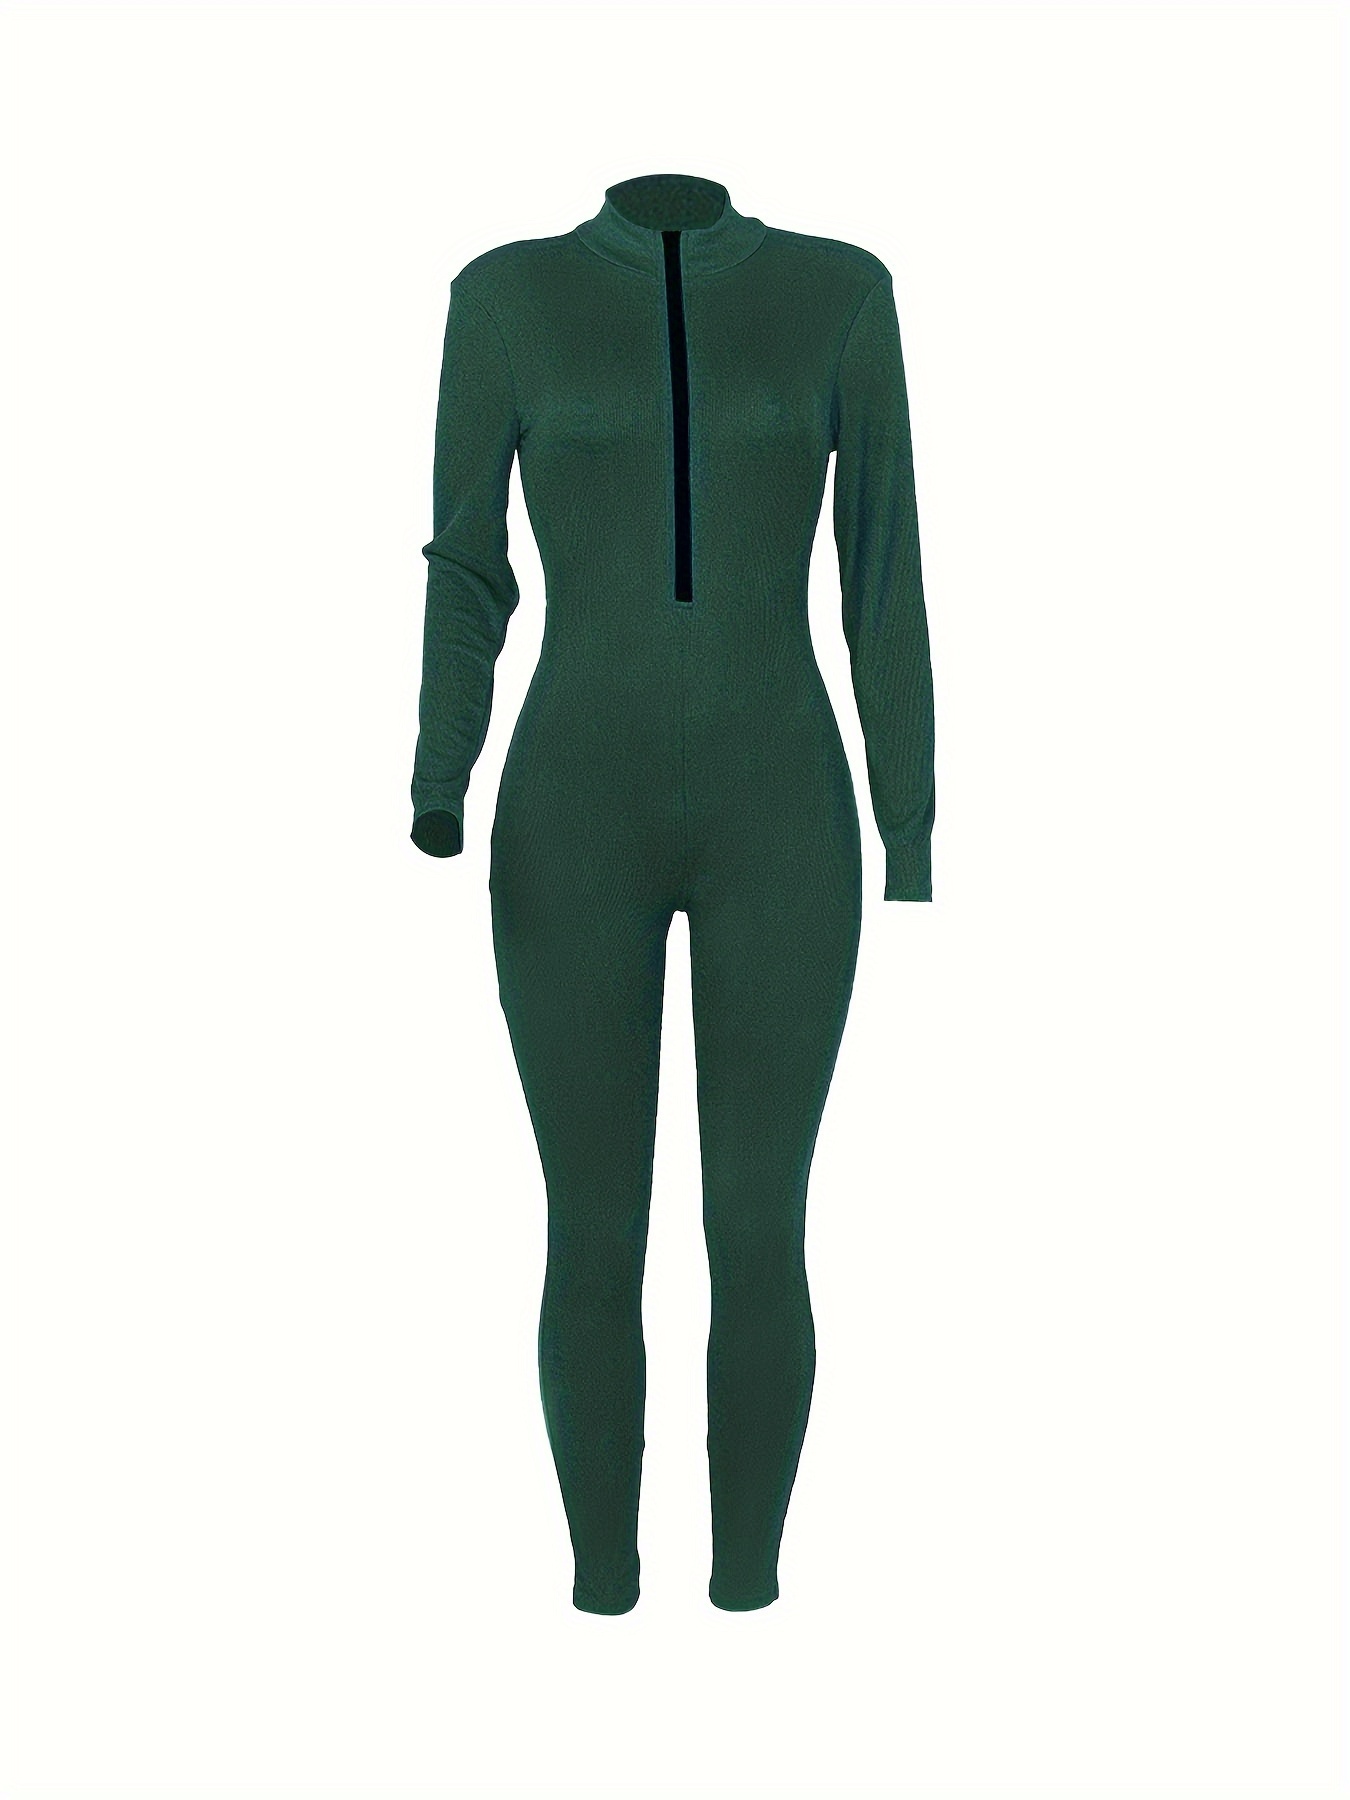 Jurllyshe Solid Color Short Sleeve Casual Fashion Zipper Jumpsuit